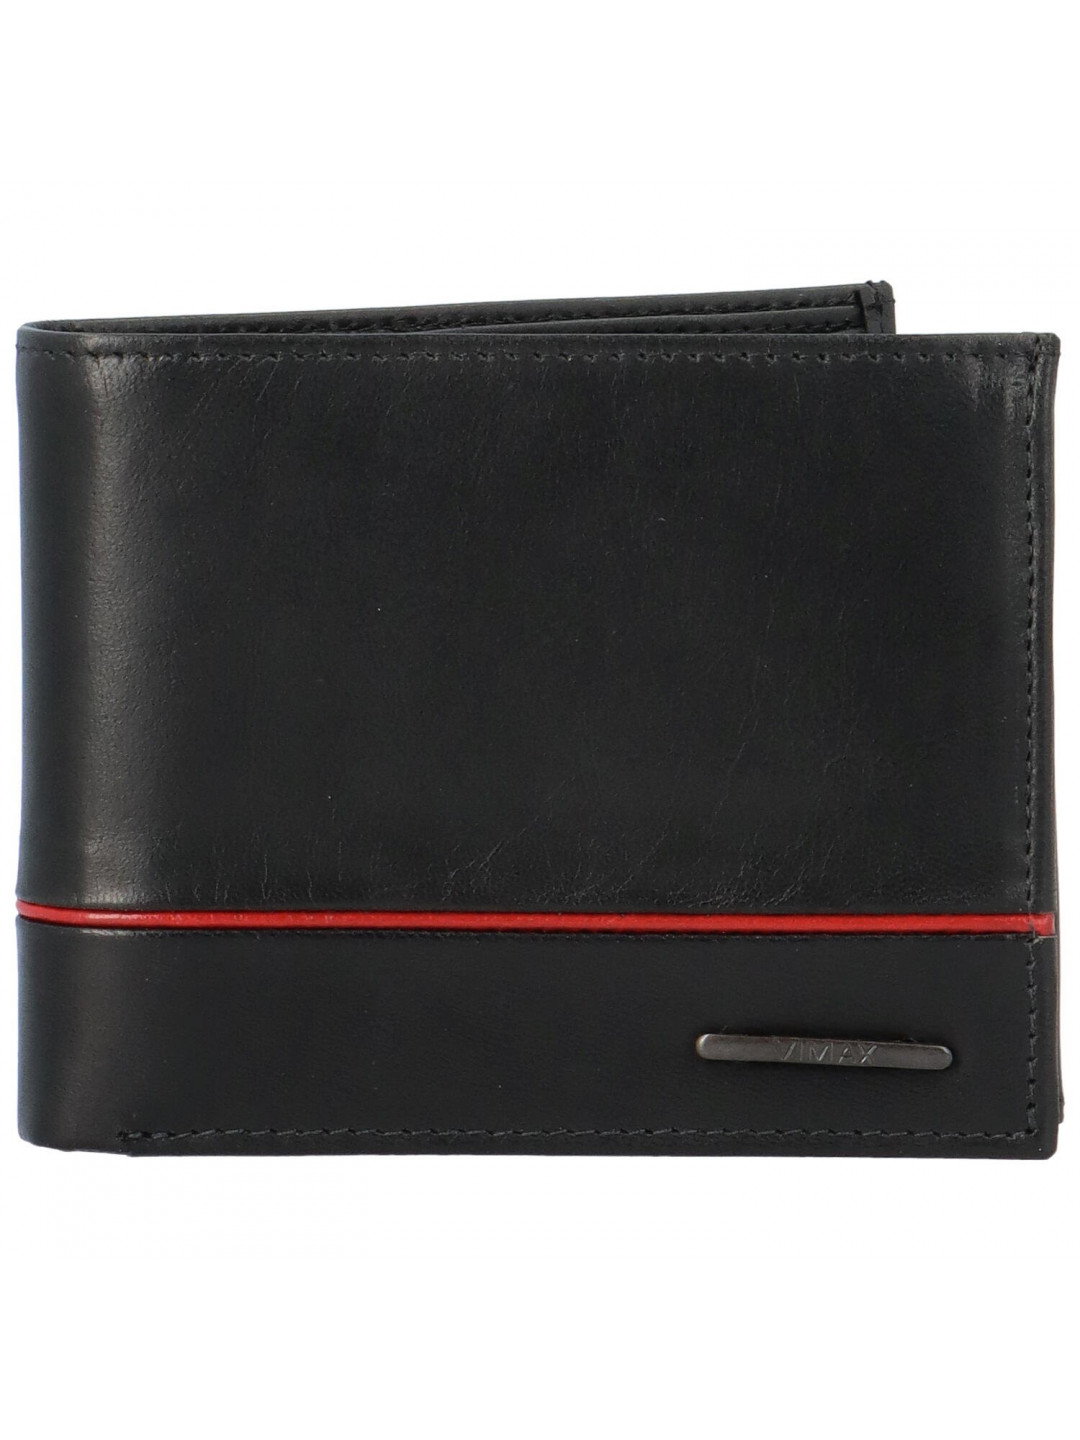 Pánská kožená peněženka na šířku Vimax Weron černo červená